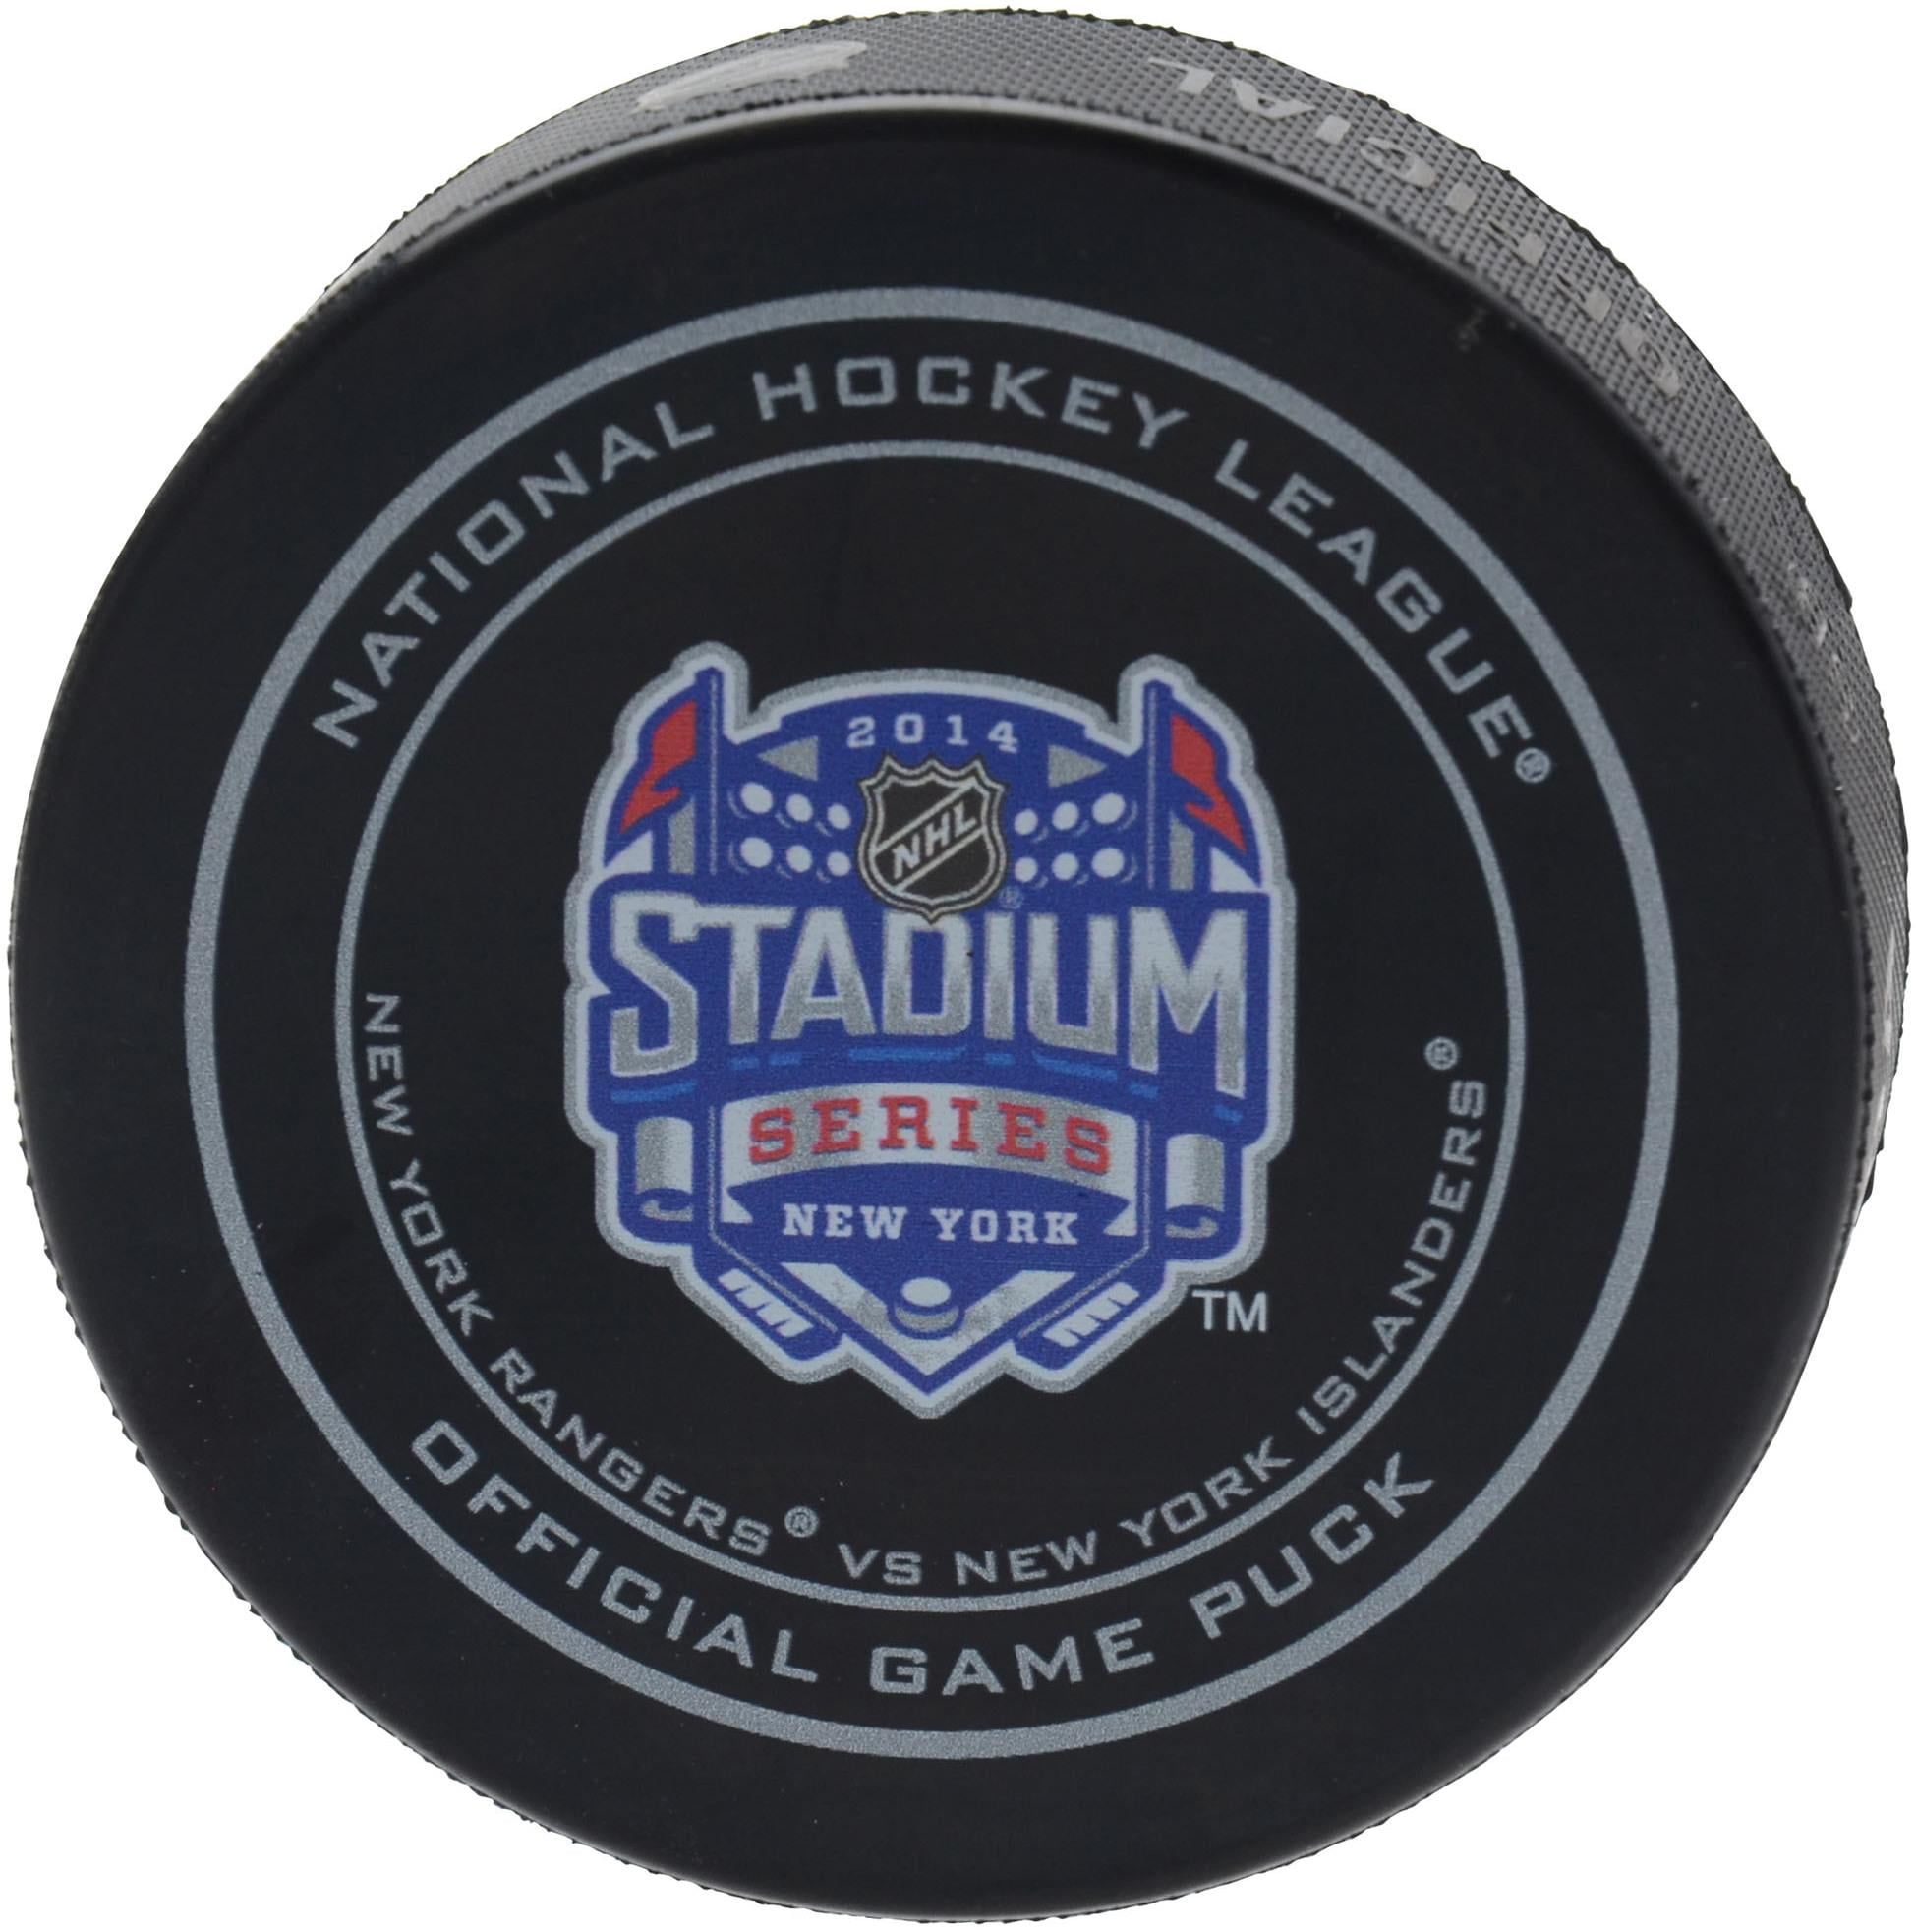 New York Rangers vs. New York Islanders 2014 NHL Stadium ...